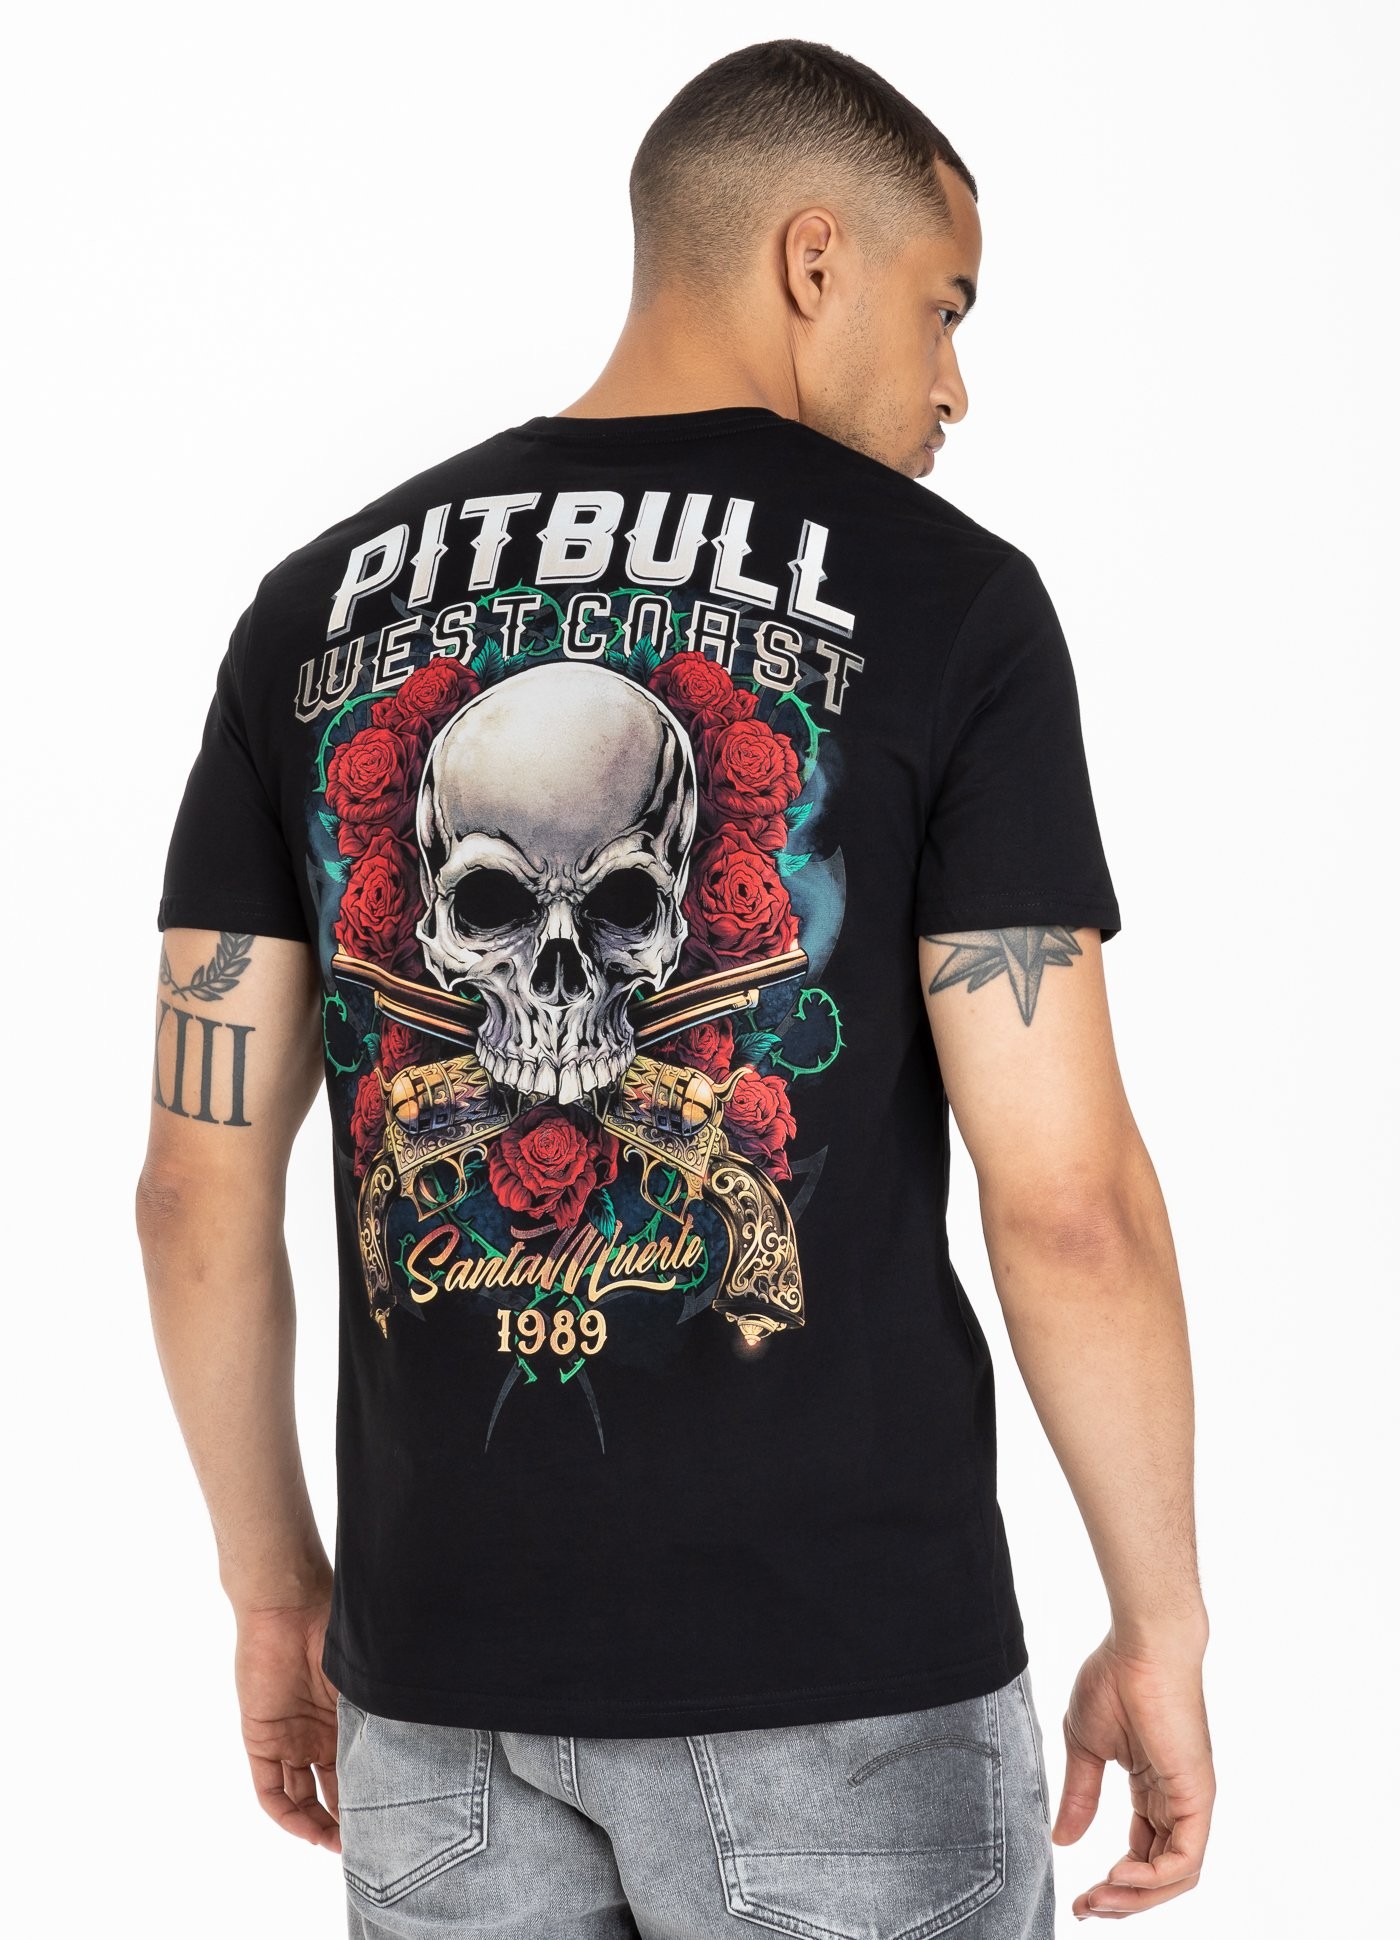 Pitbull West Coast - T-Shirt Santa Muerte